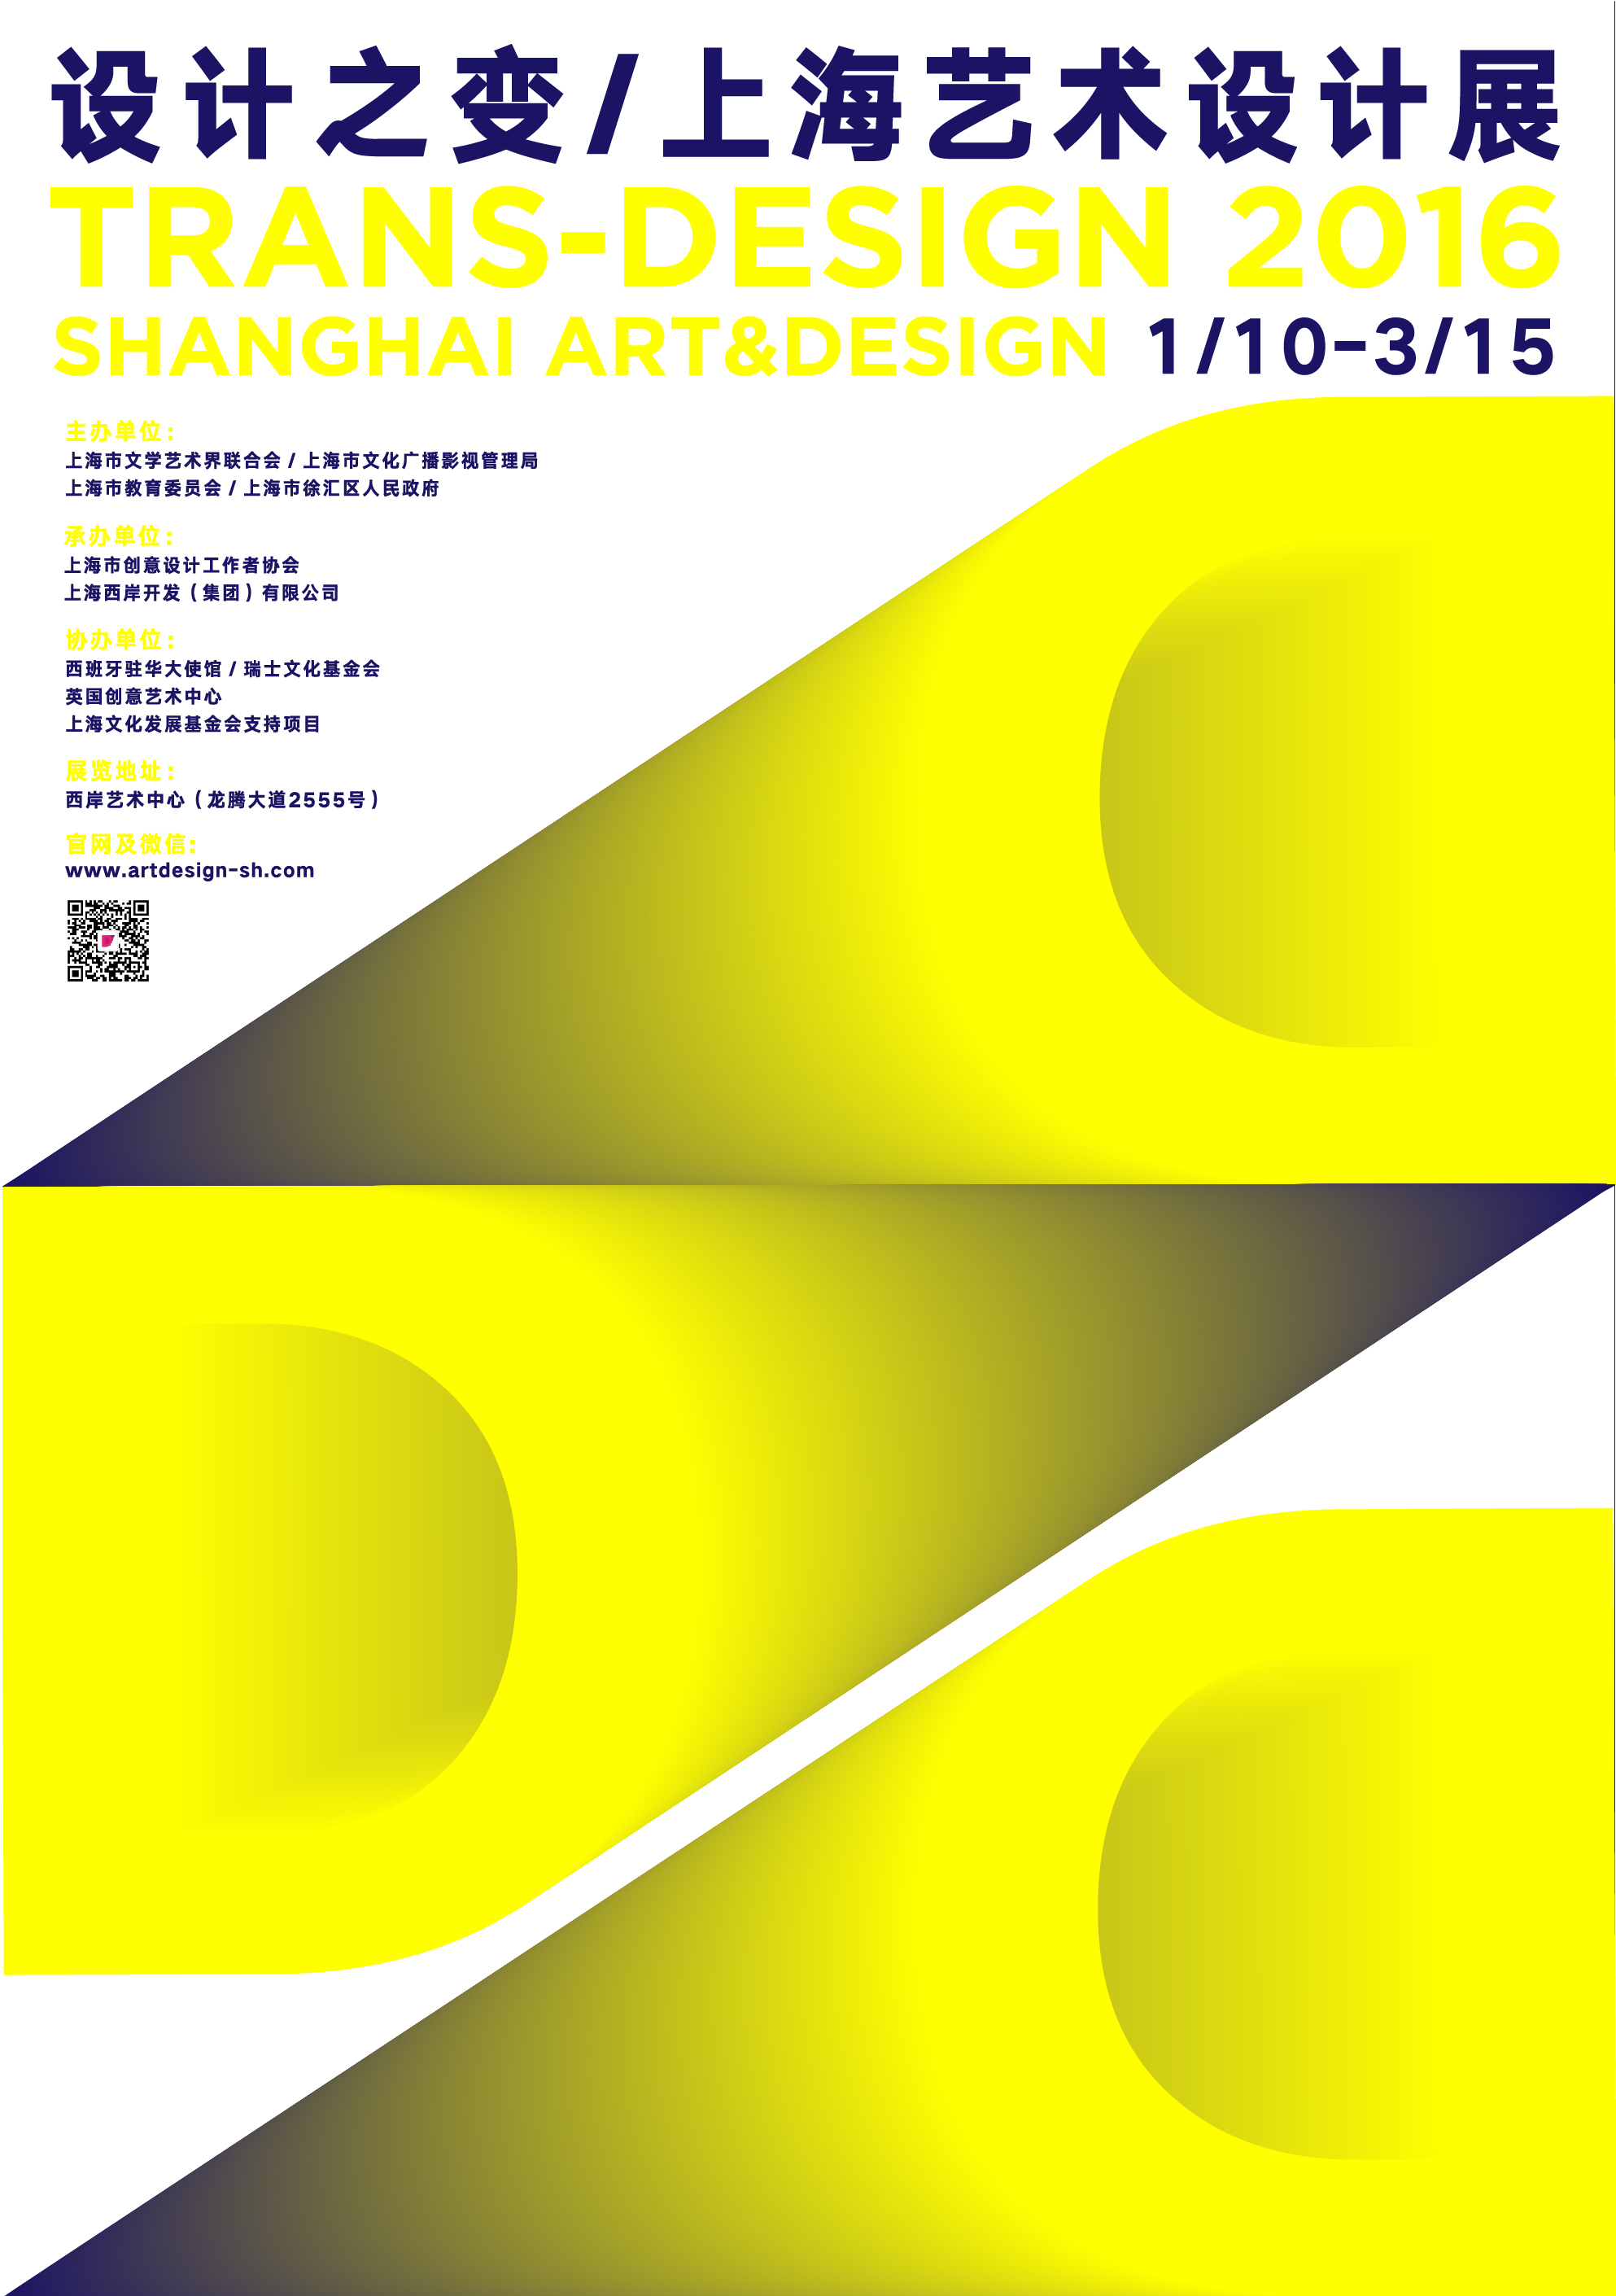 Trans-design / Shanghai Art & Design Exhibition